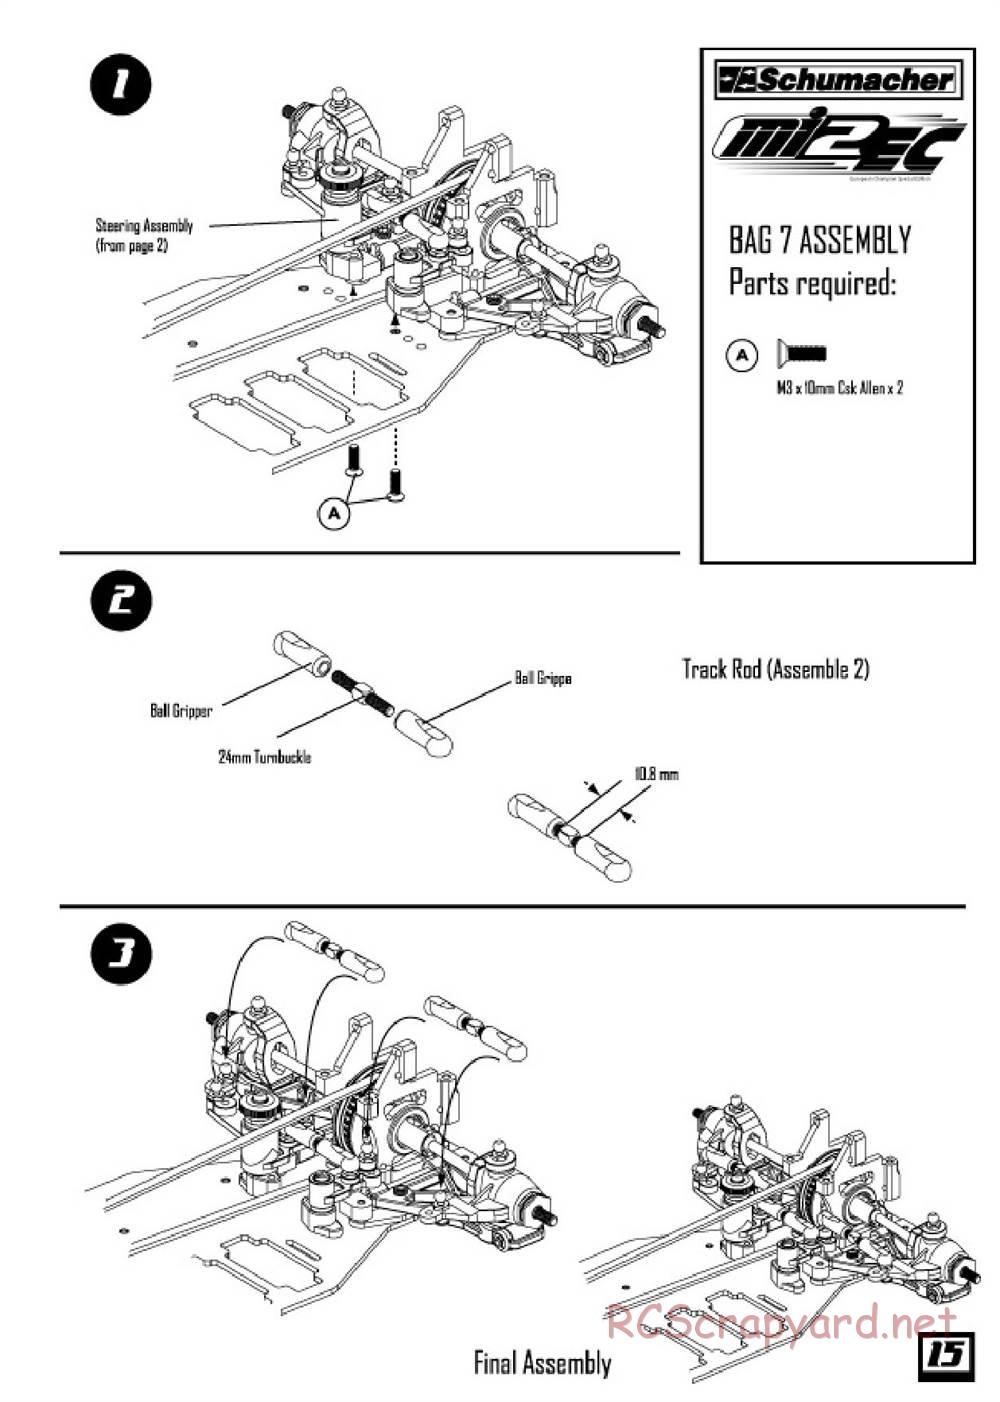 Schumacher - Mi2 EC - Manual - Page 17